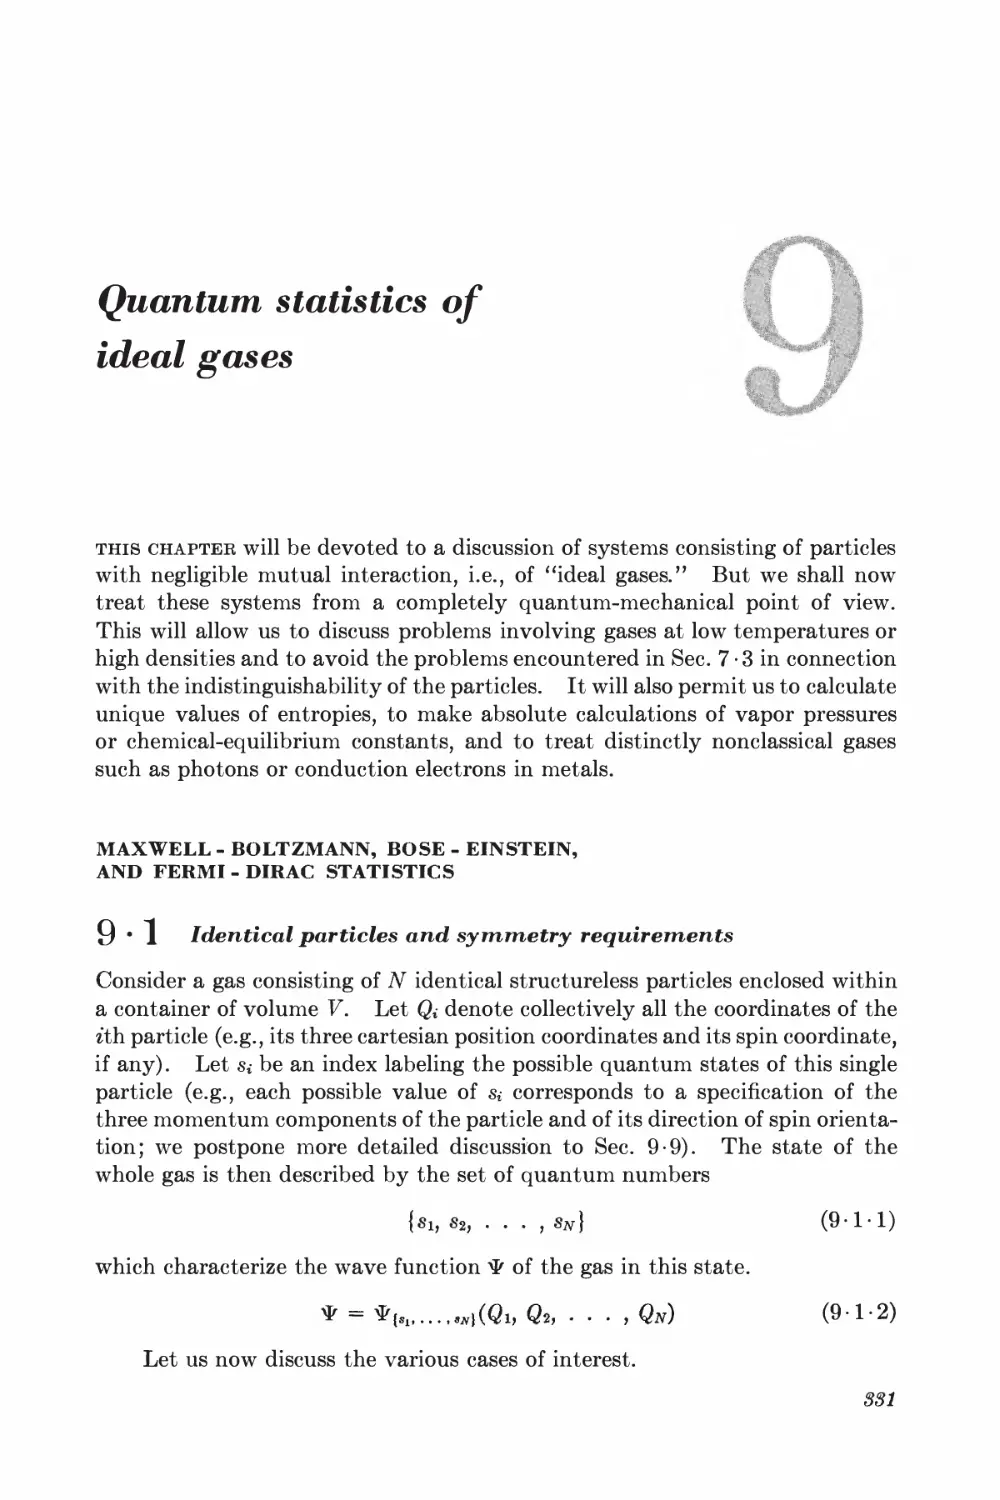 Chapter 9: Quantum Statistics of Ideal Gases